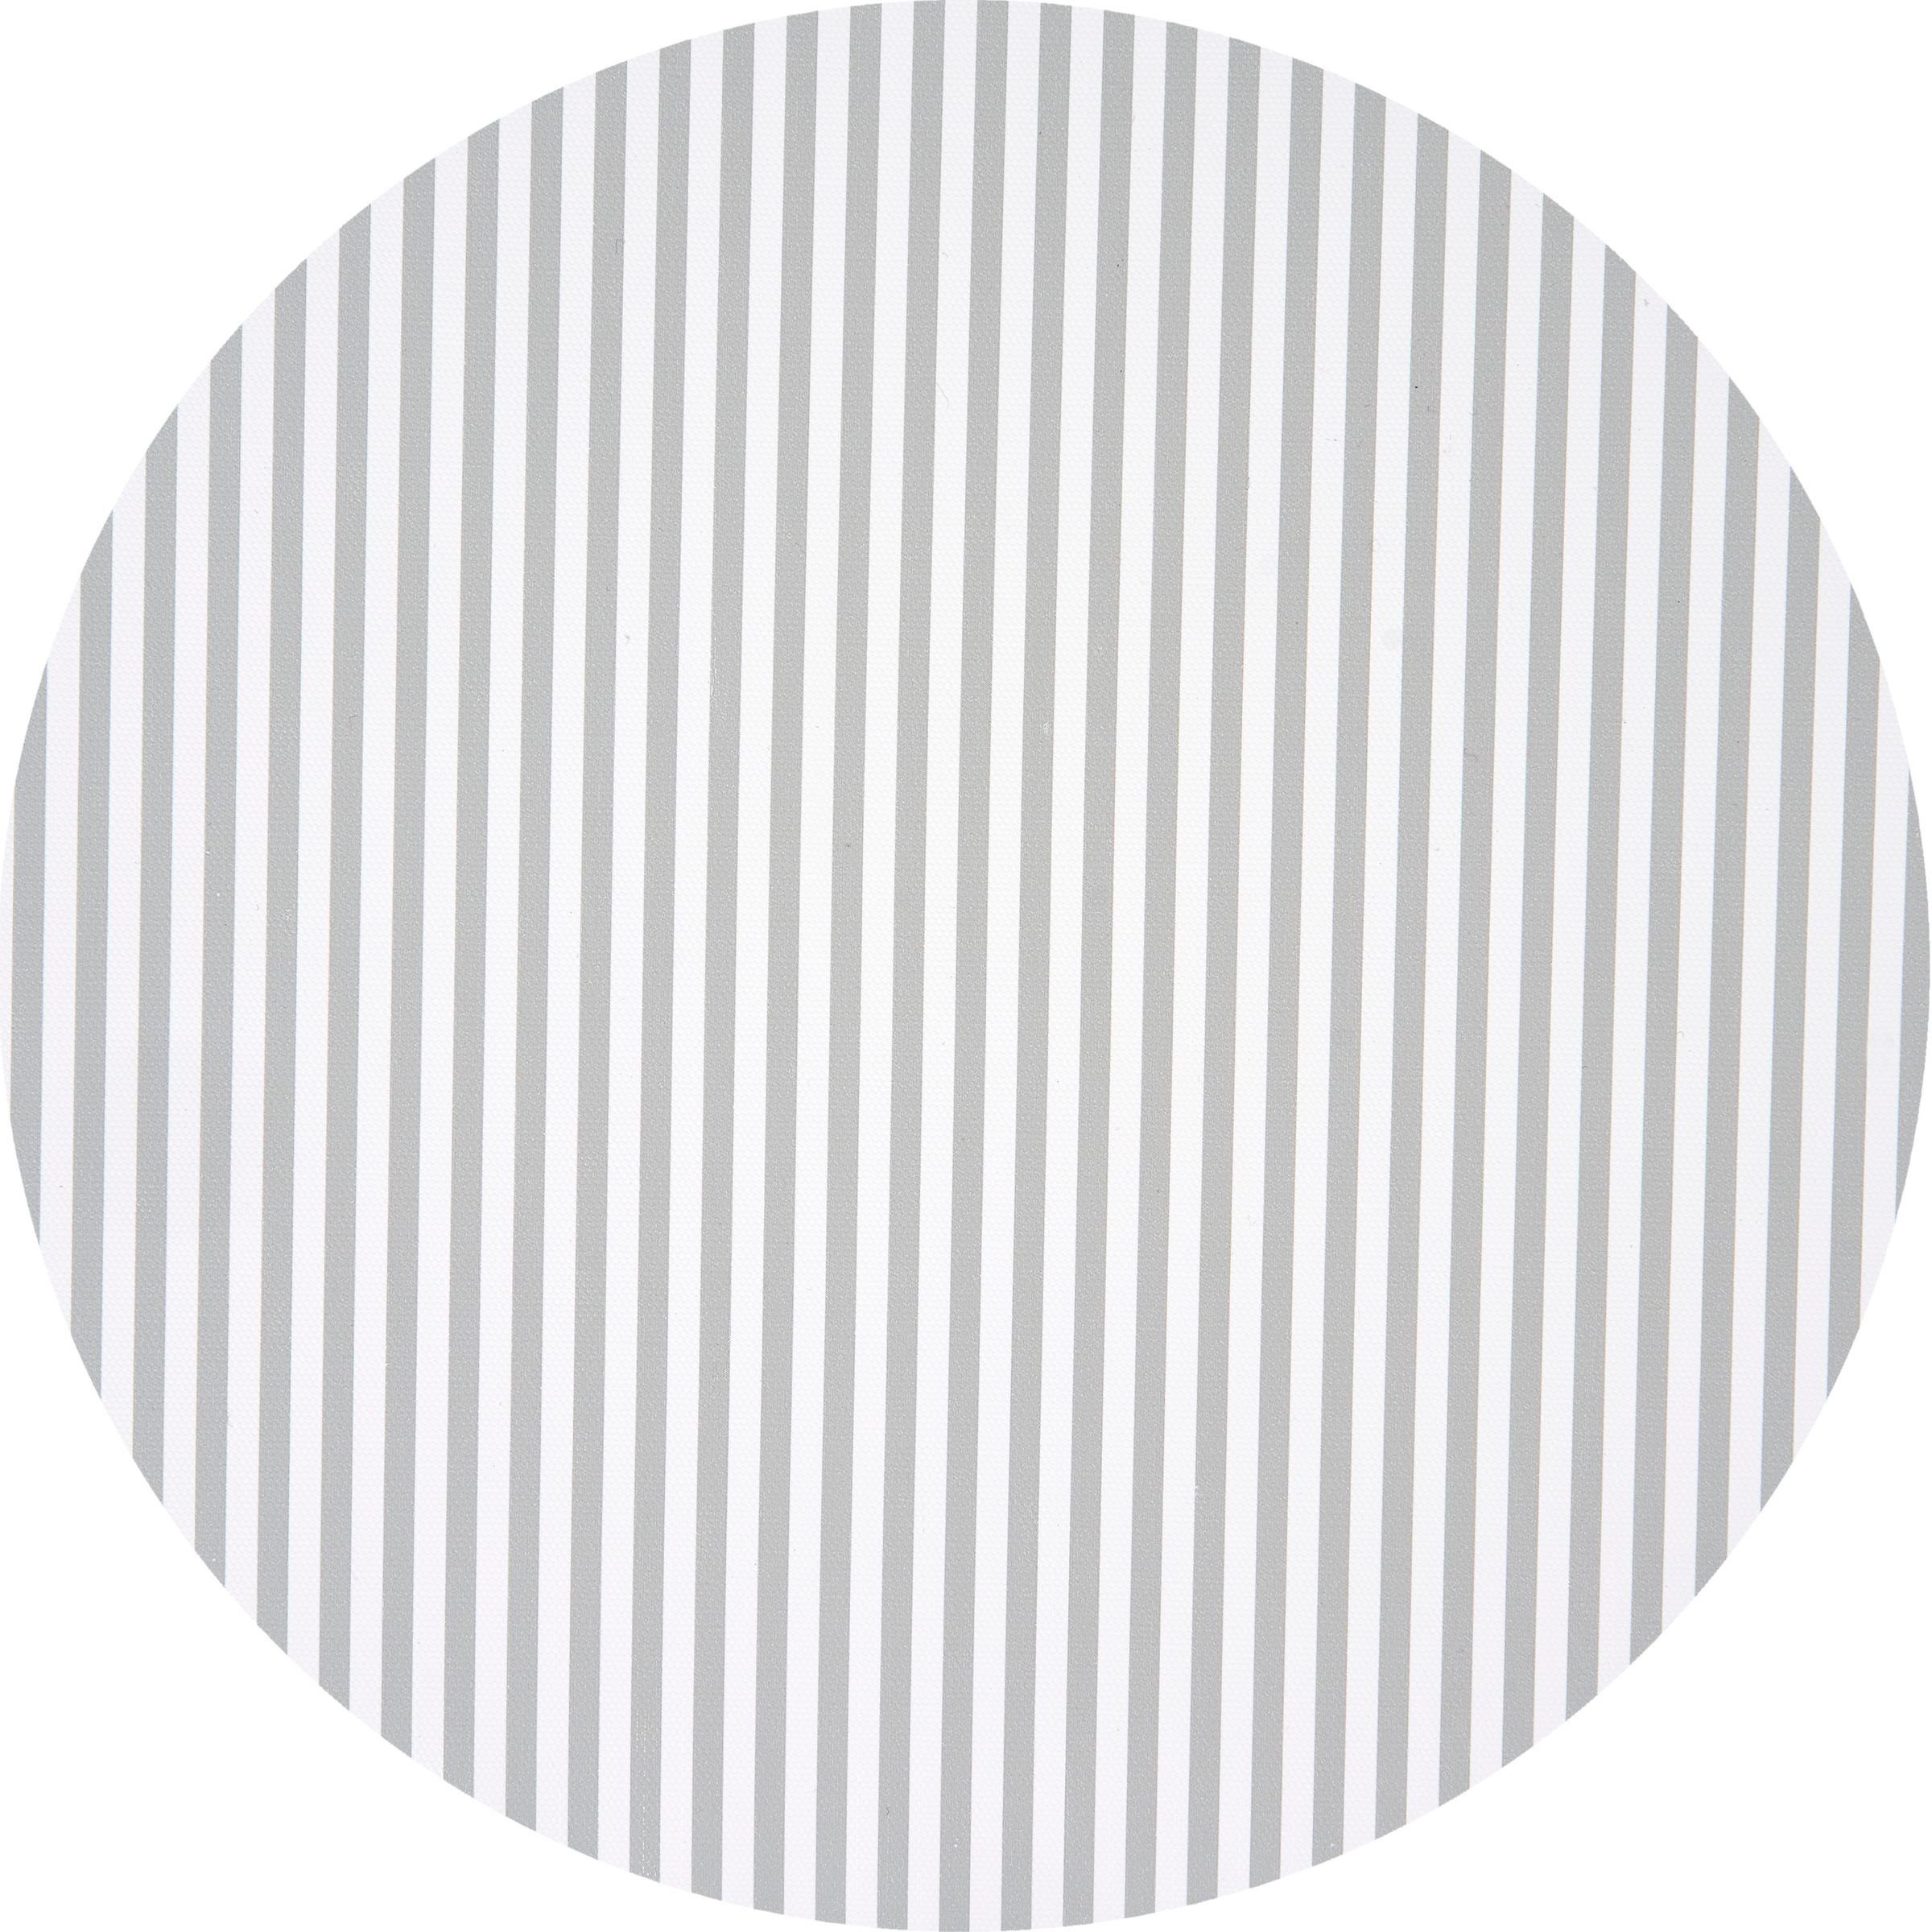 Wickelauflage Wickelauflage Exklusiv stripes 70x85 Wiko ALVI Kuschel grey cm Alvi® Folie